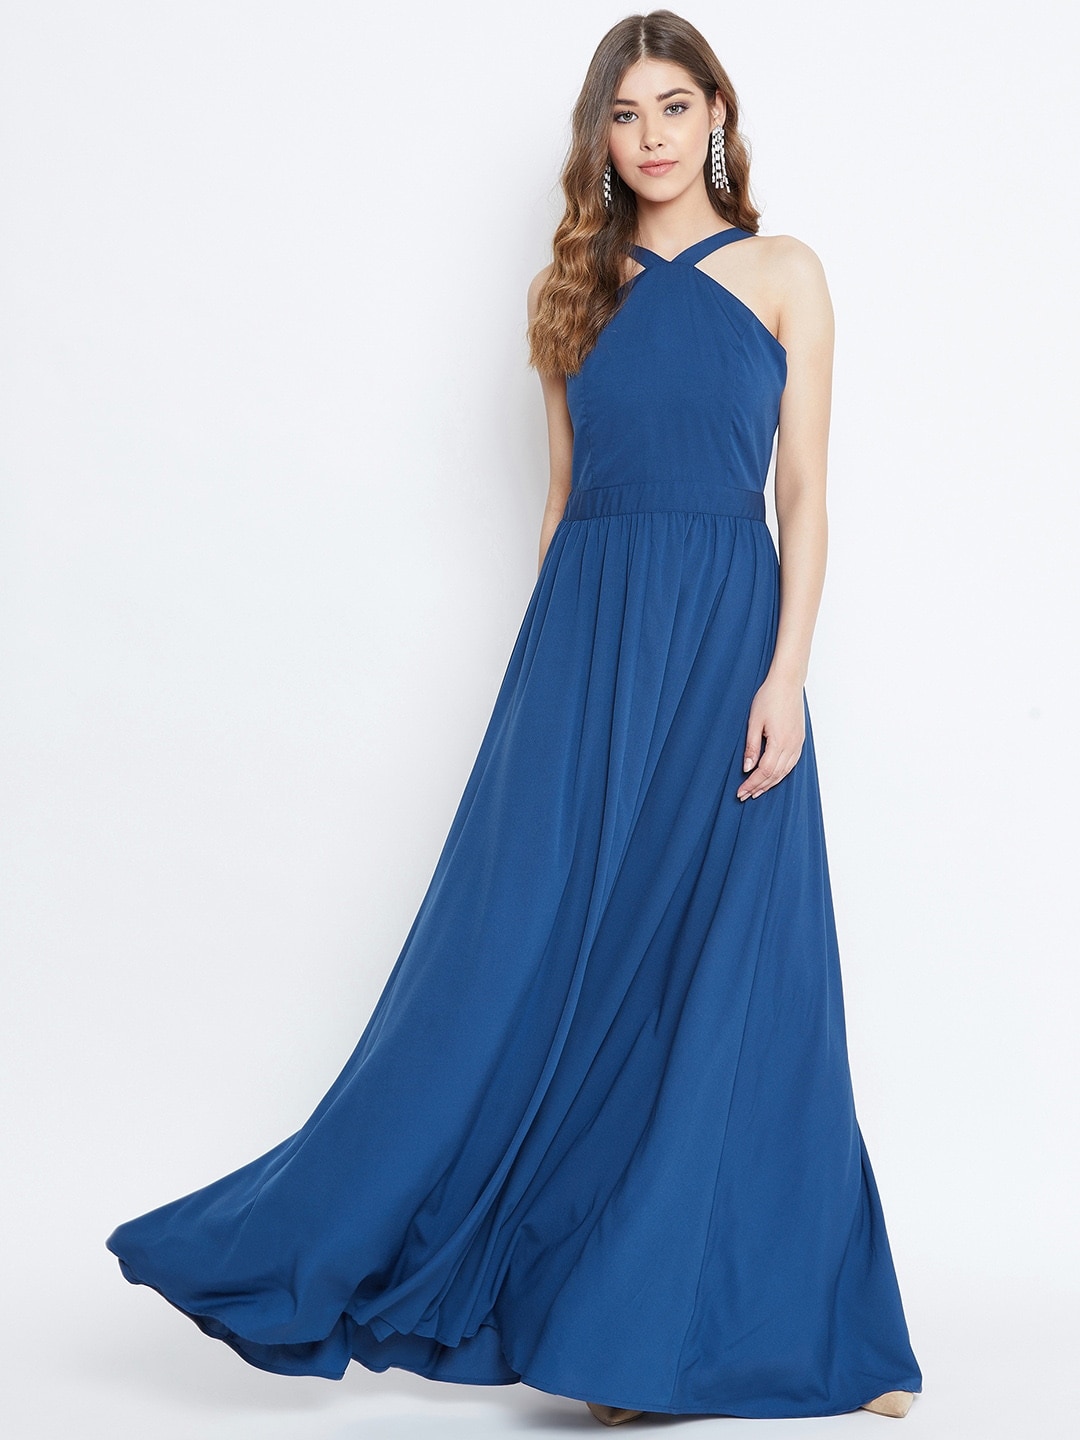 Berrylush Women Blue Solid Maxi Dress